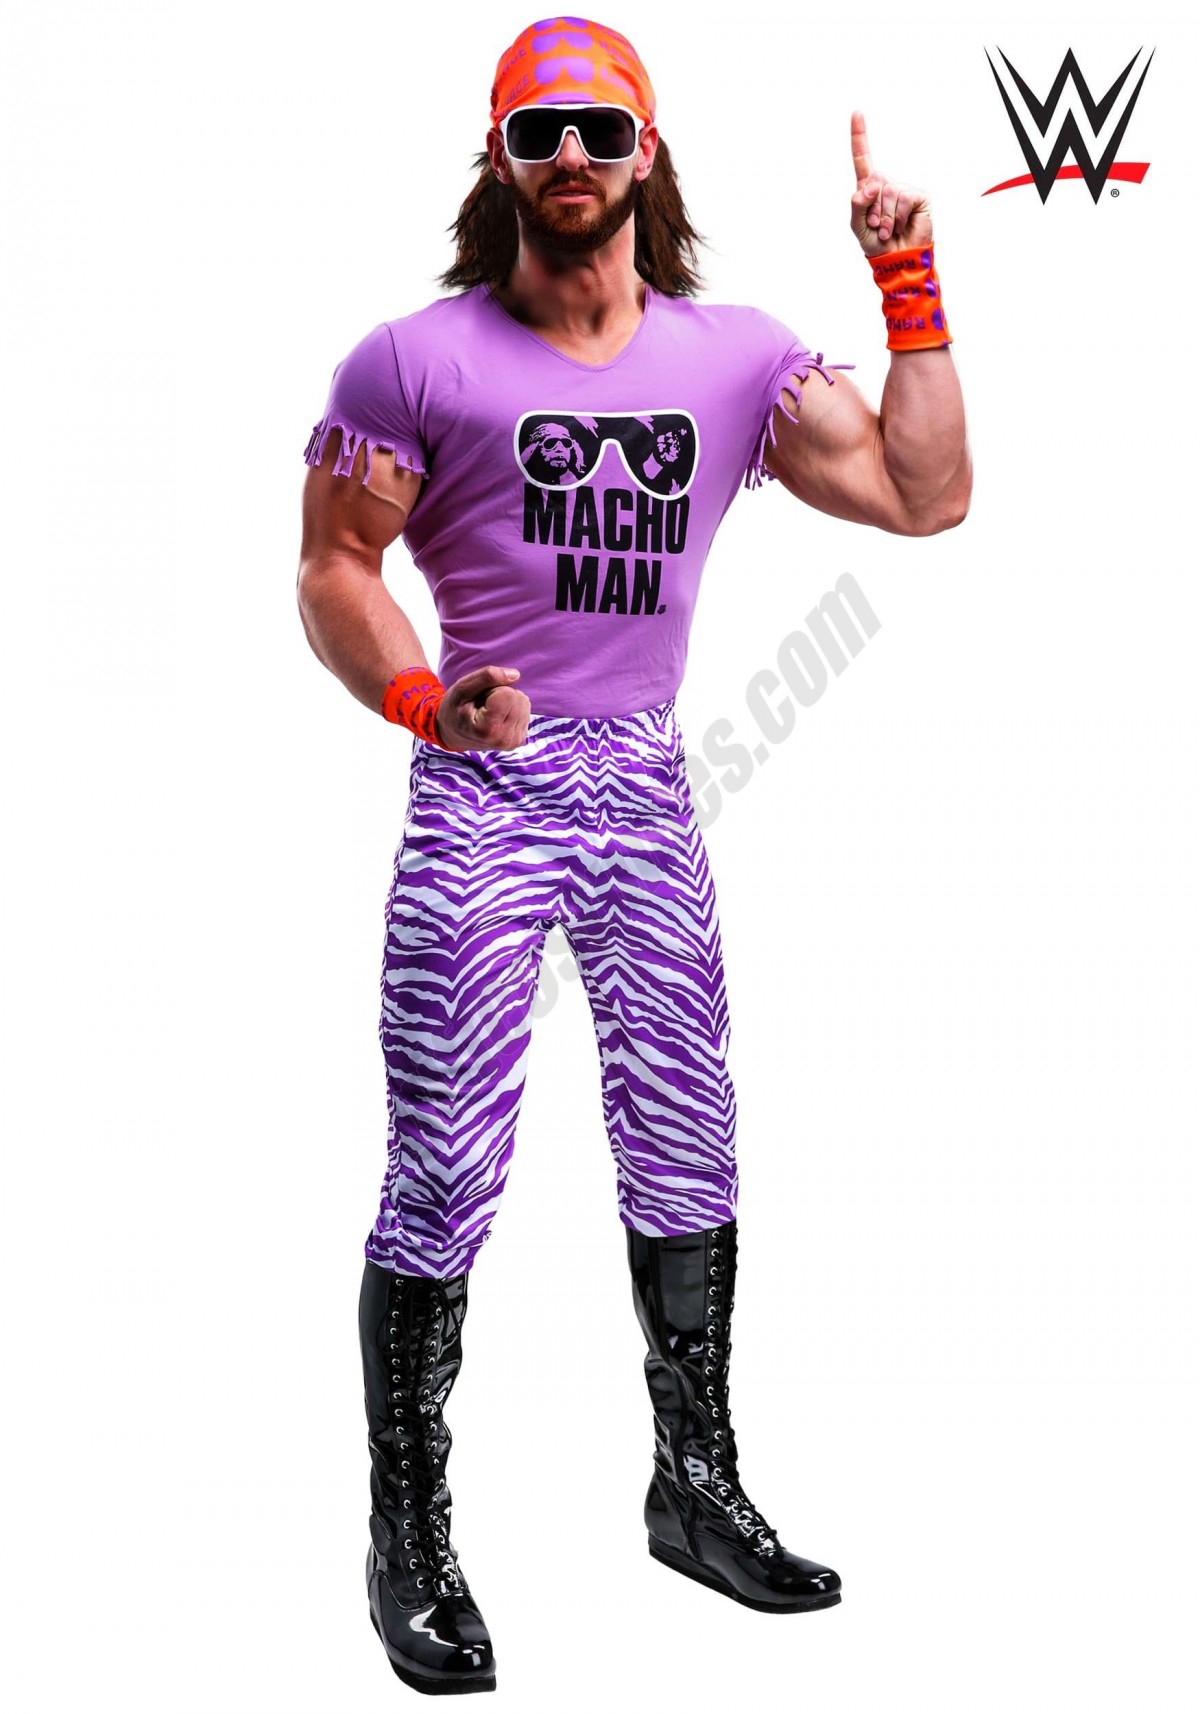 Macho Man Madness WWE Adult Costume - Men's - -0